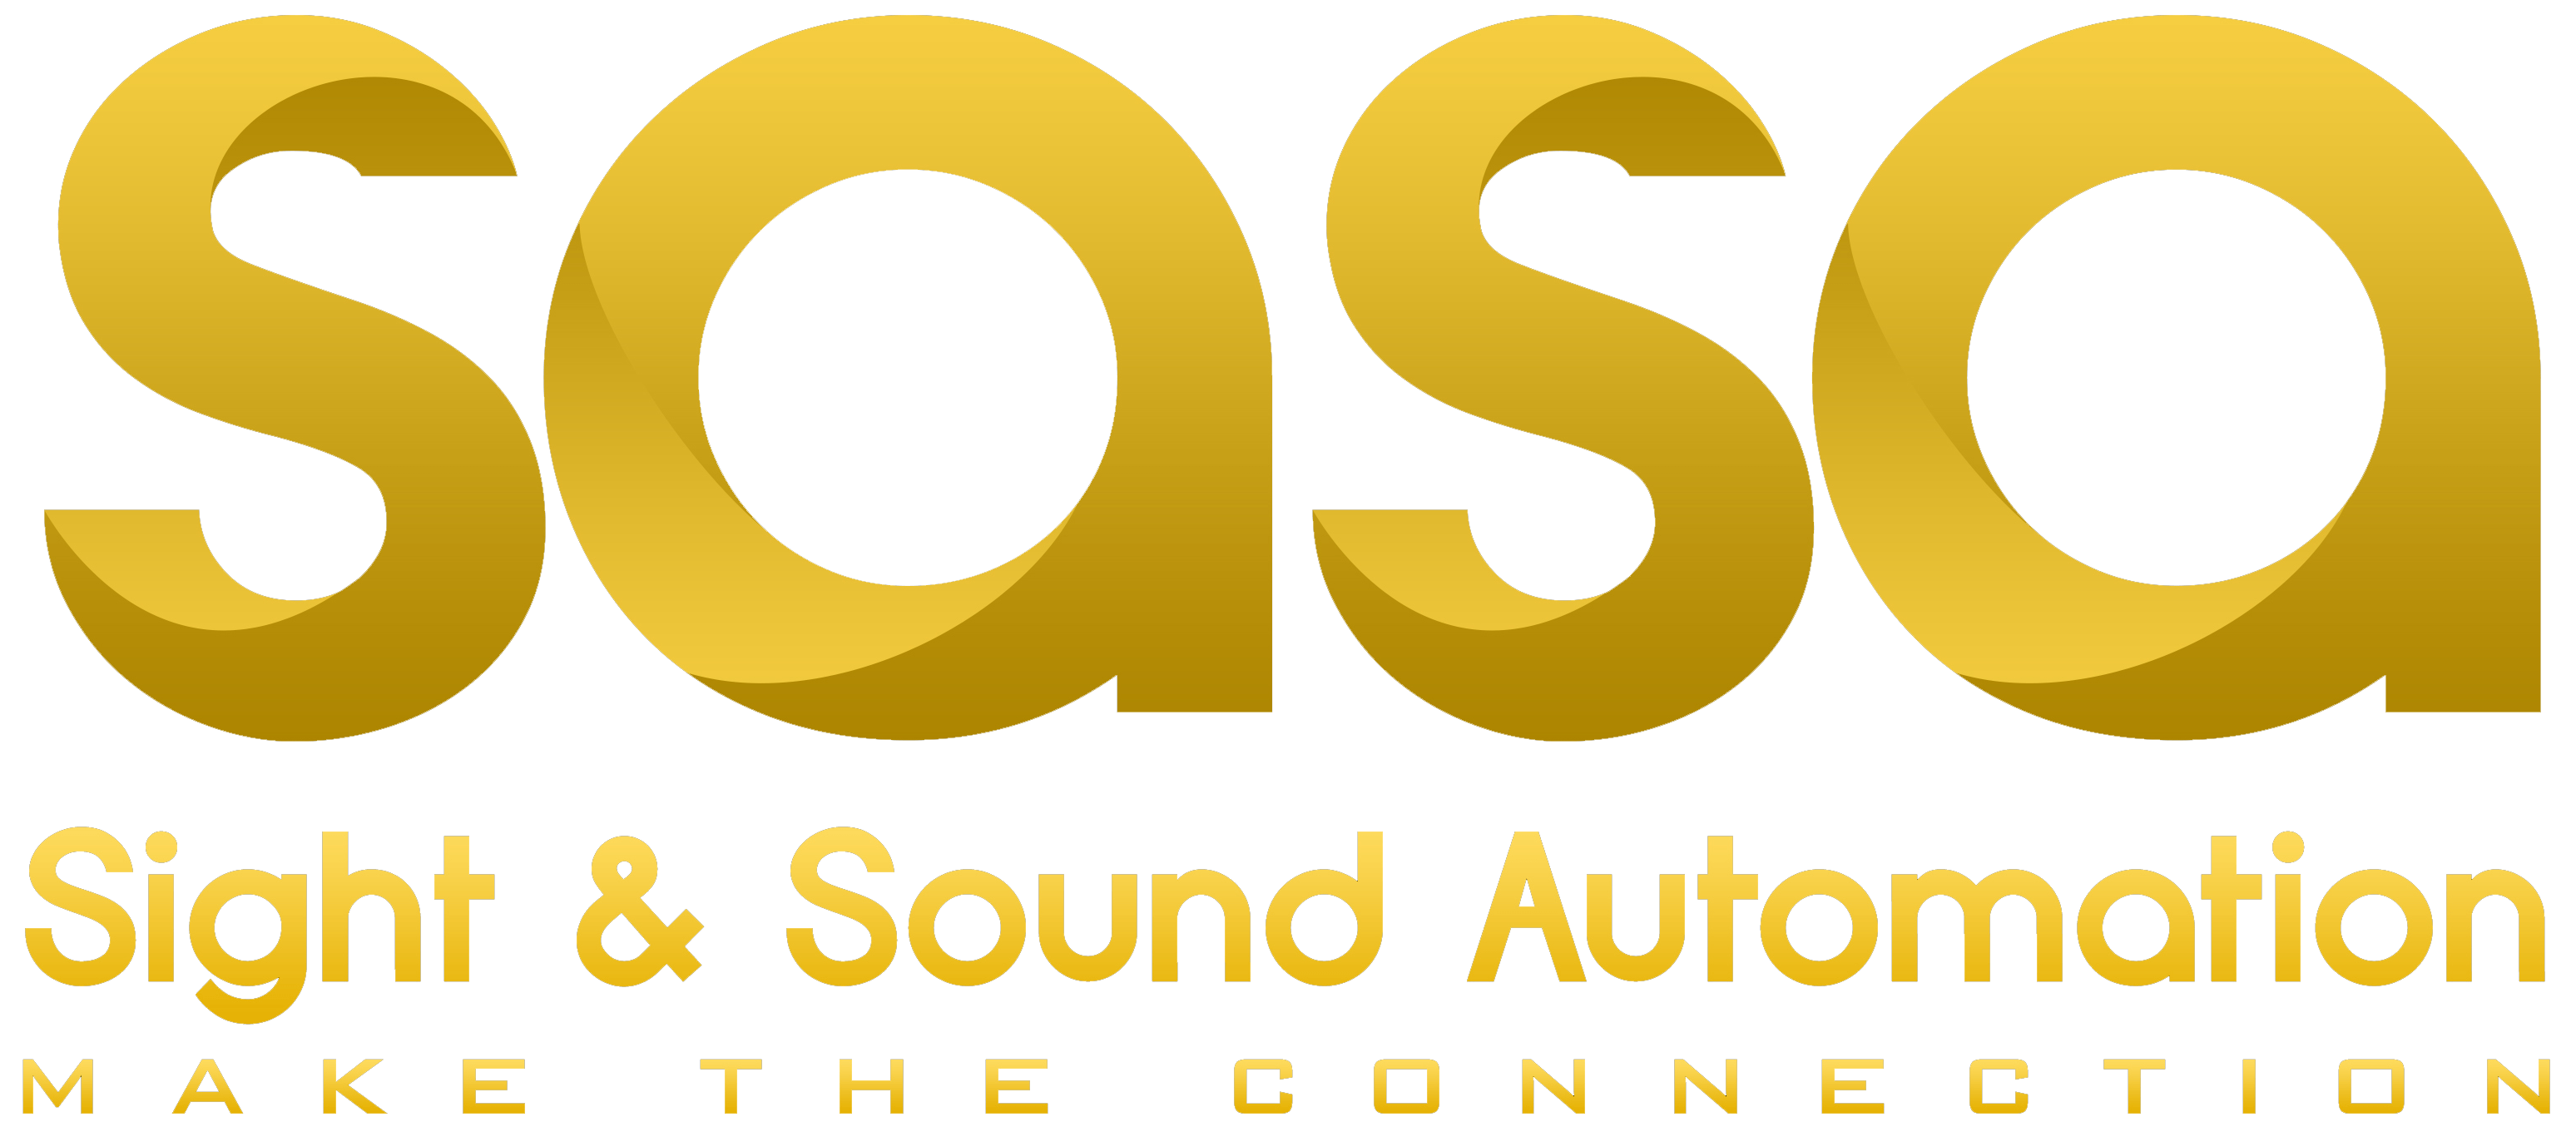 Sasa Logo - sasa-logo SASA – Sight & Sound Automation